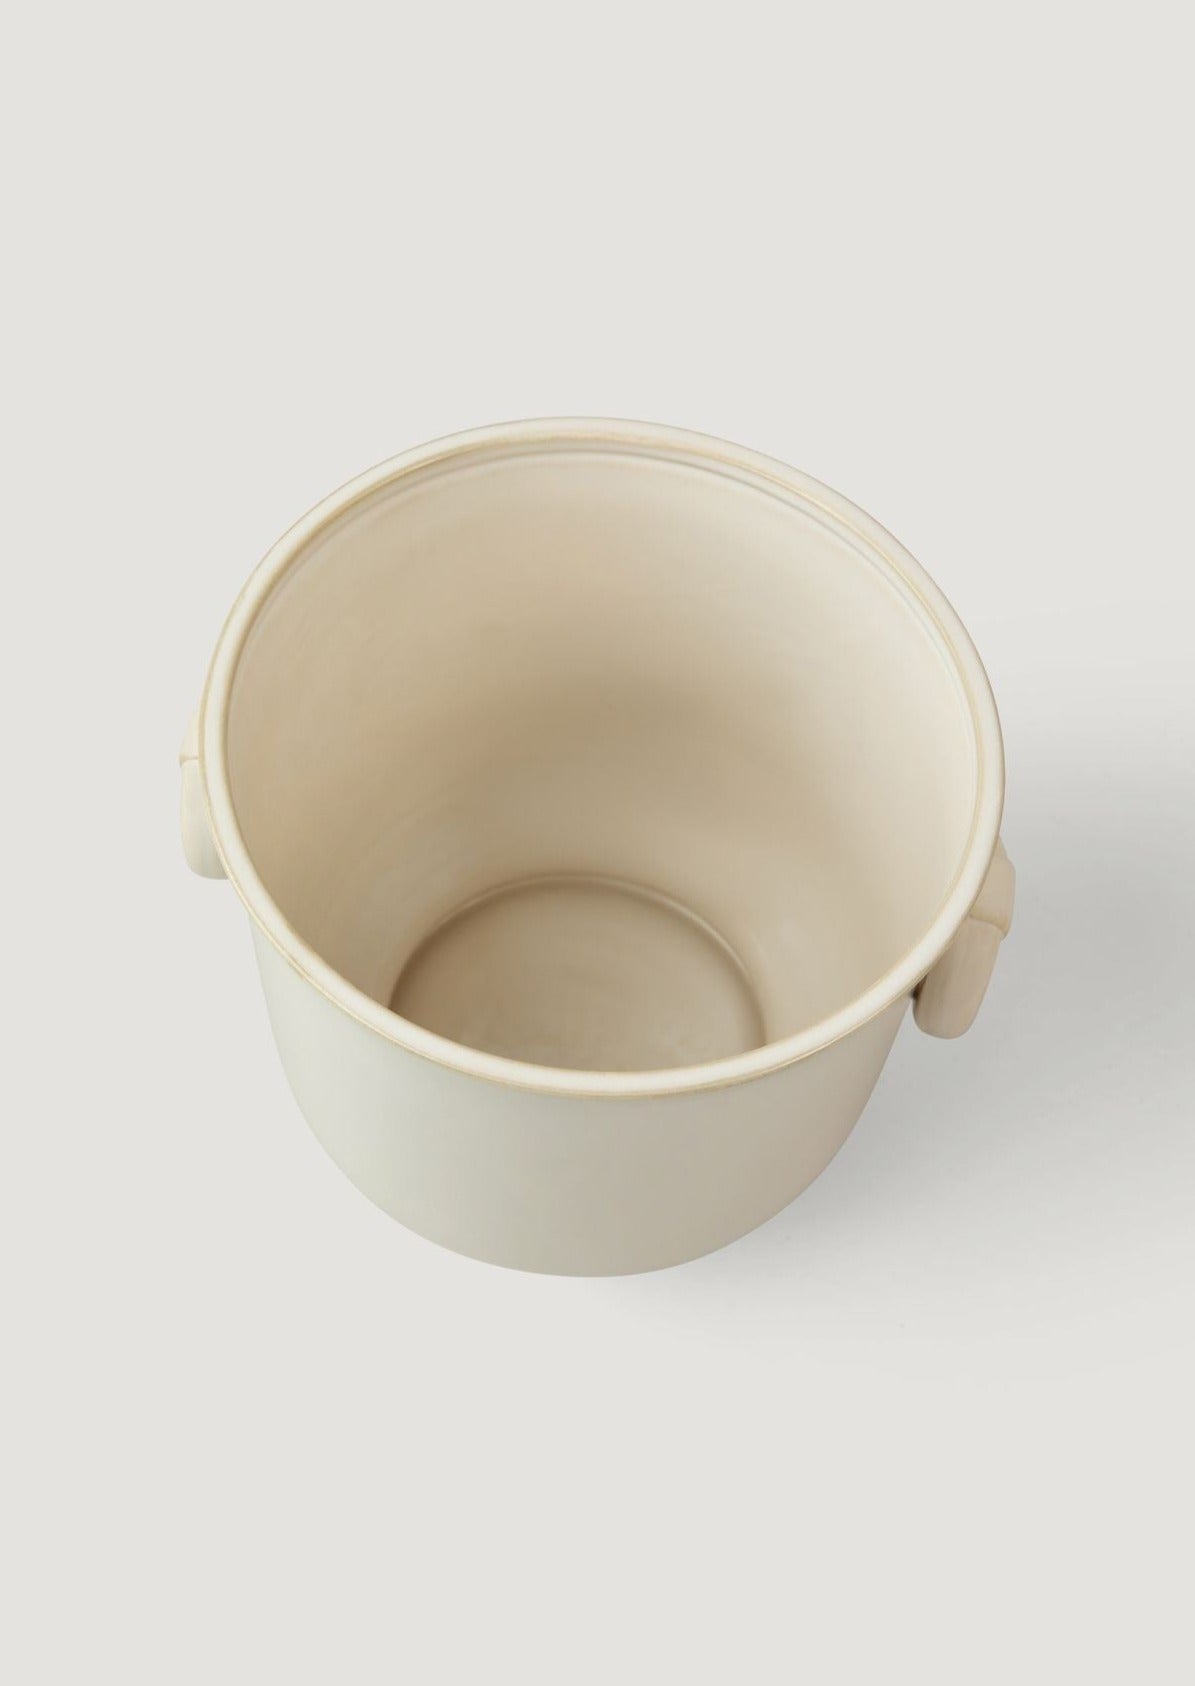 Inside the Glossy Cream Ceramic Cache Pot